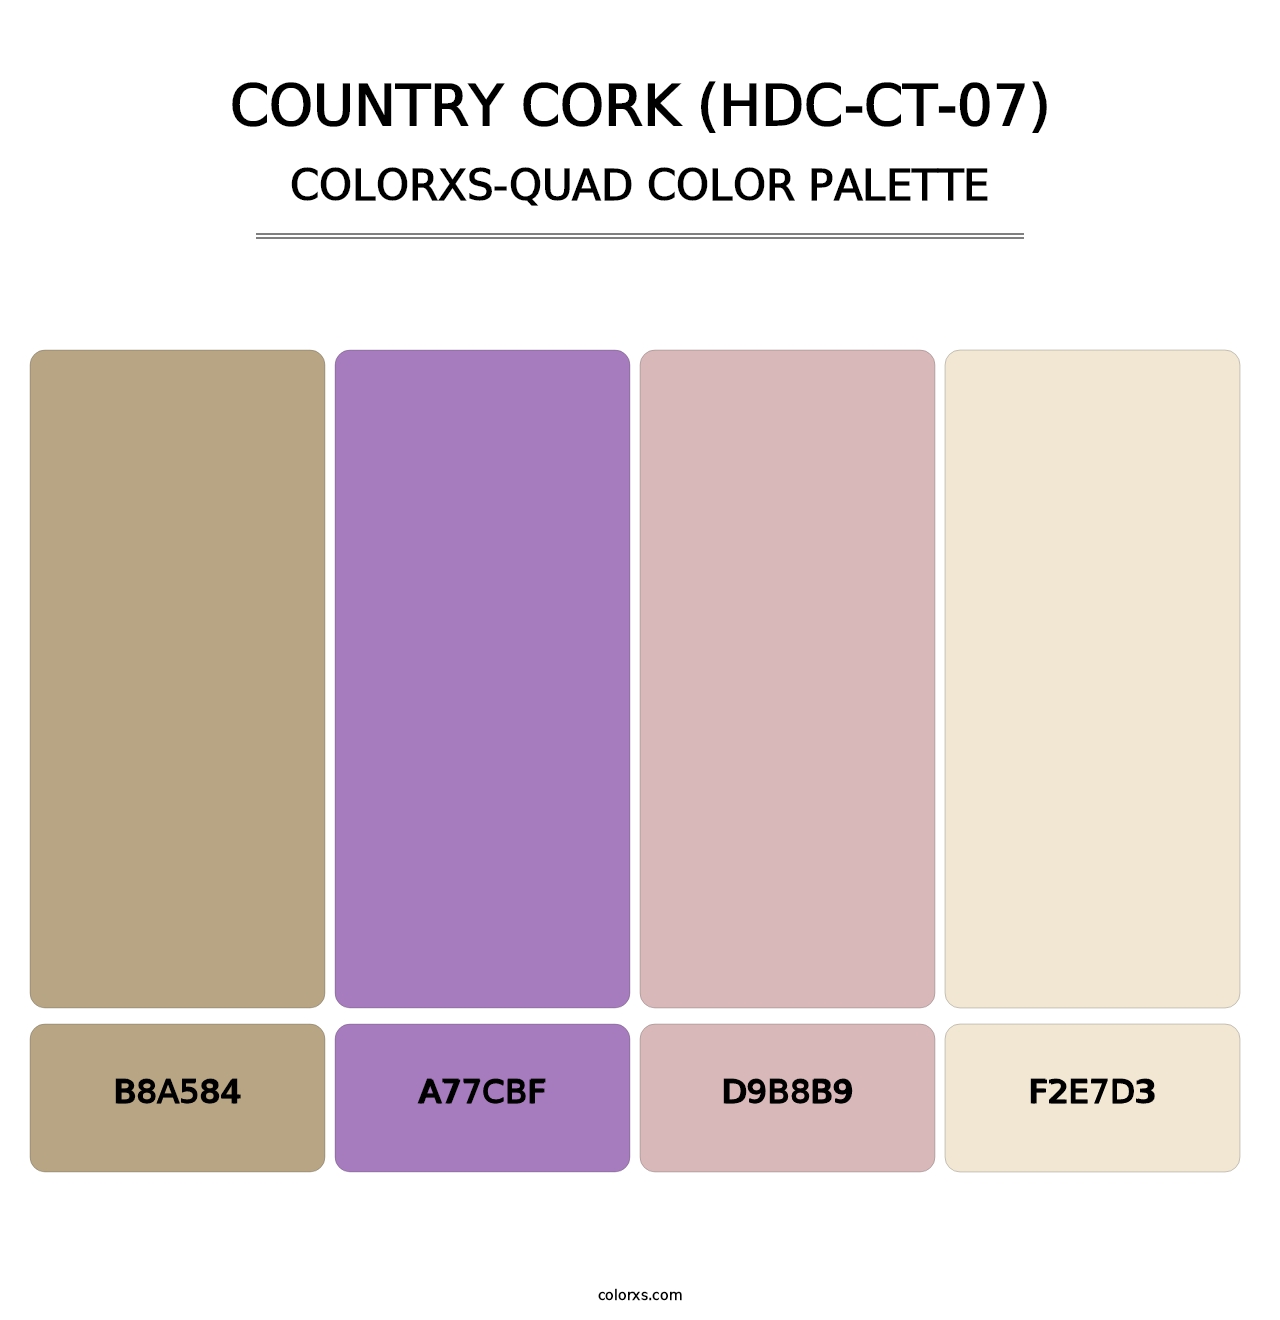 Country Cork (HDC-CT-07) - Colorxs Quad Palette